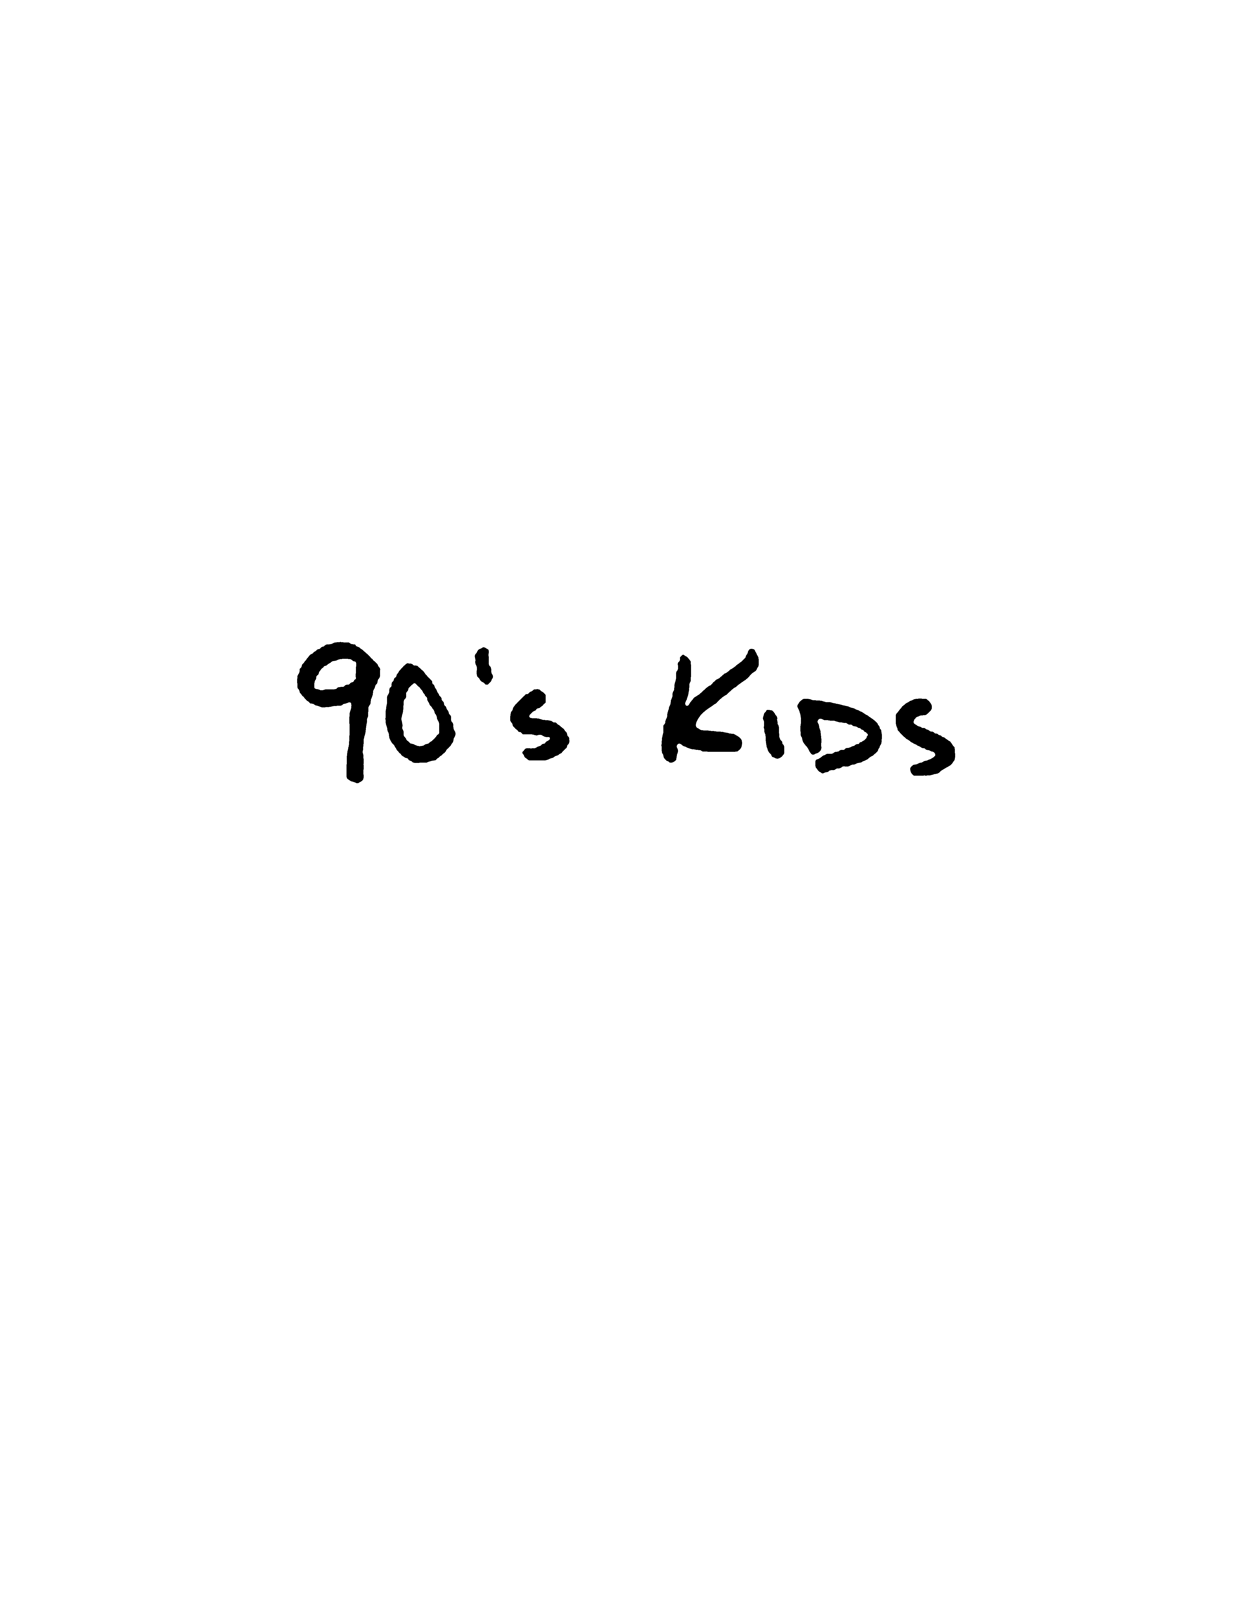 90'S KIDS